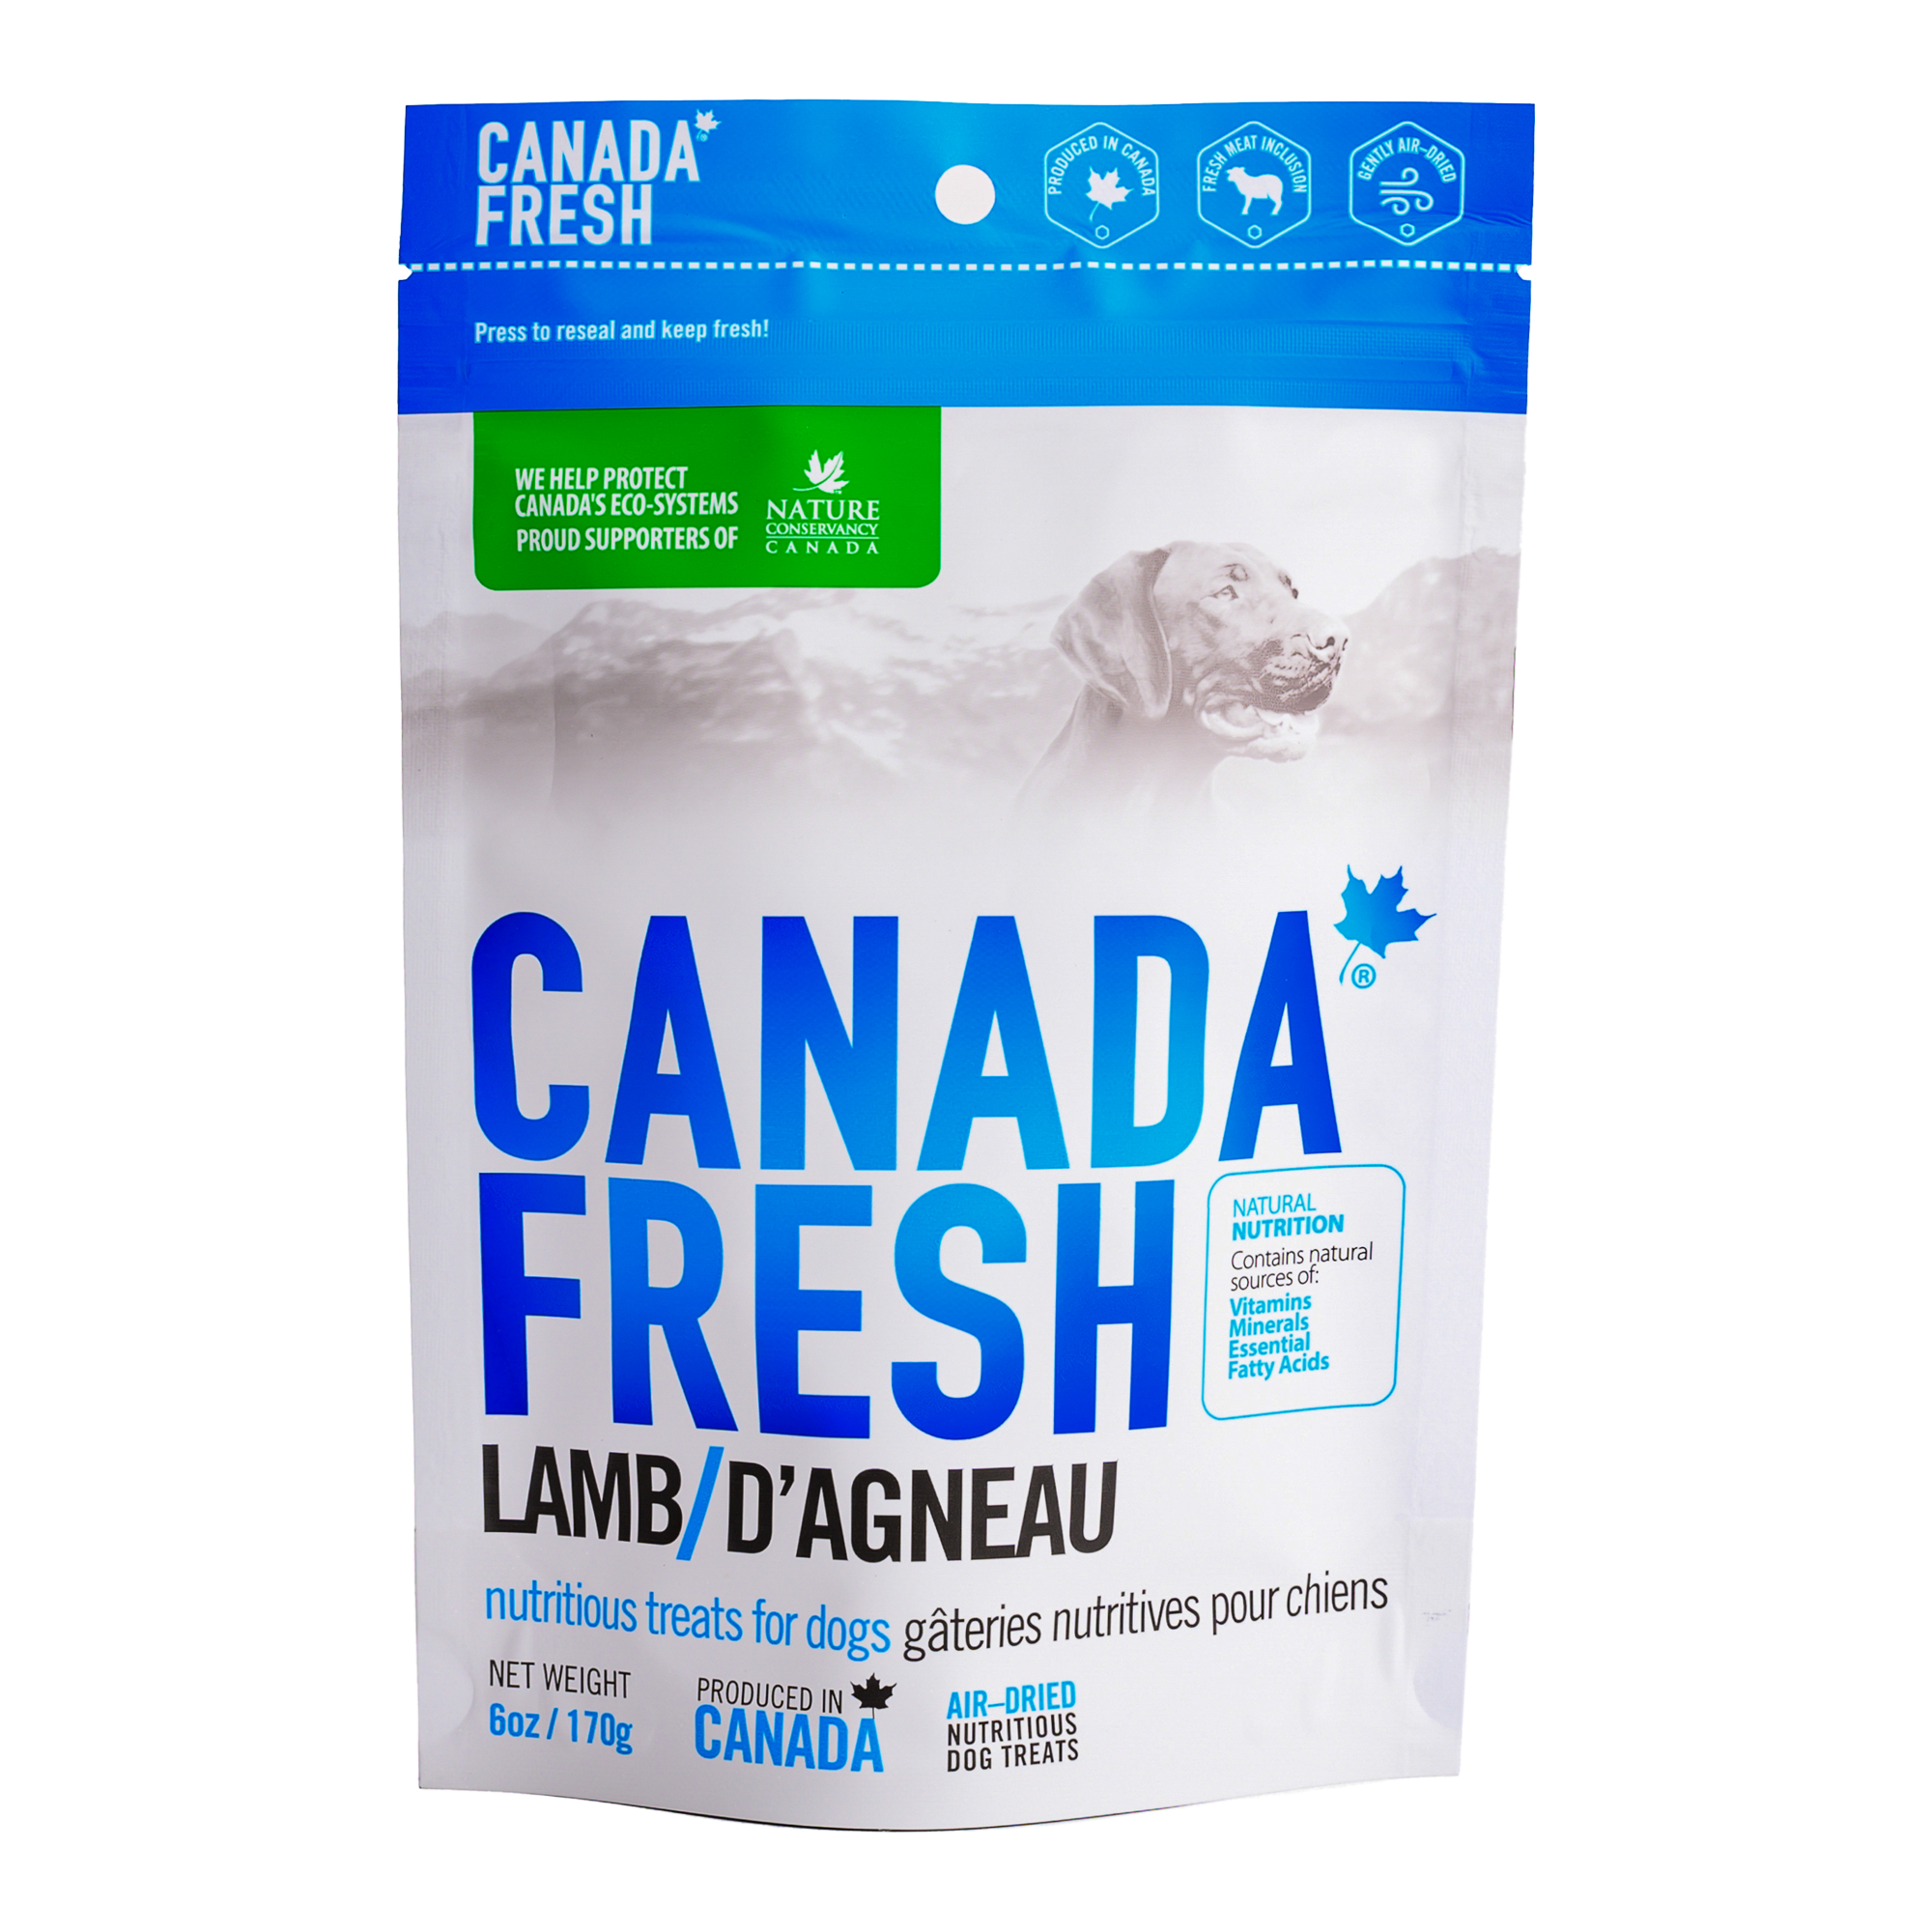 Canada Fresh Treats Dogs – SAP Lamb